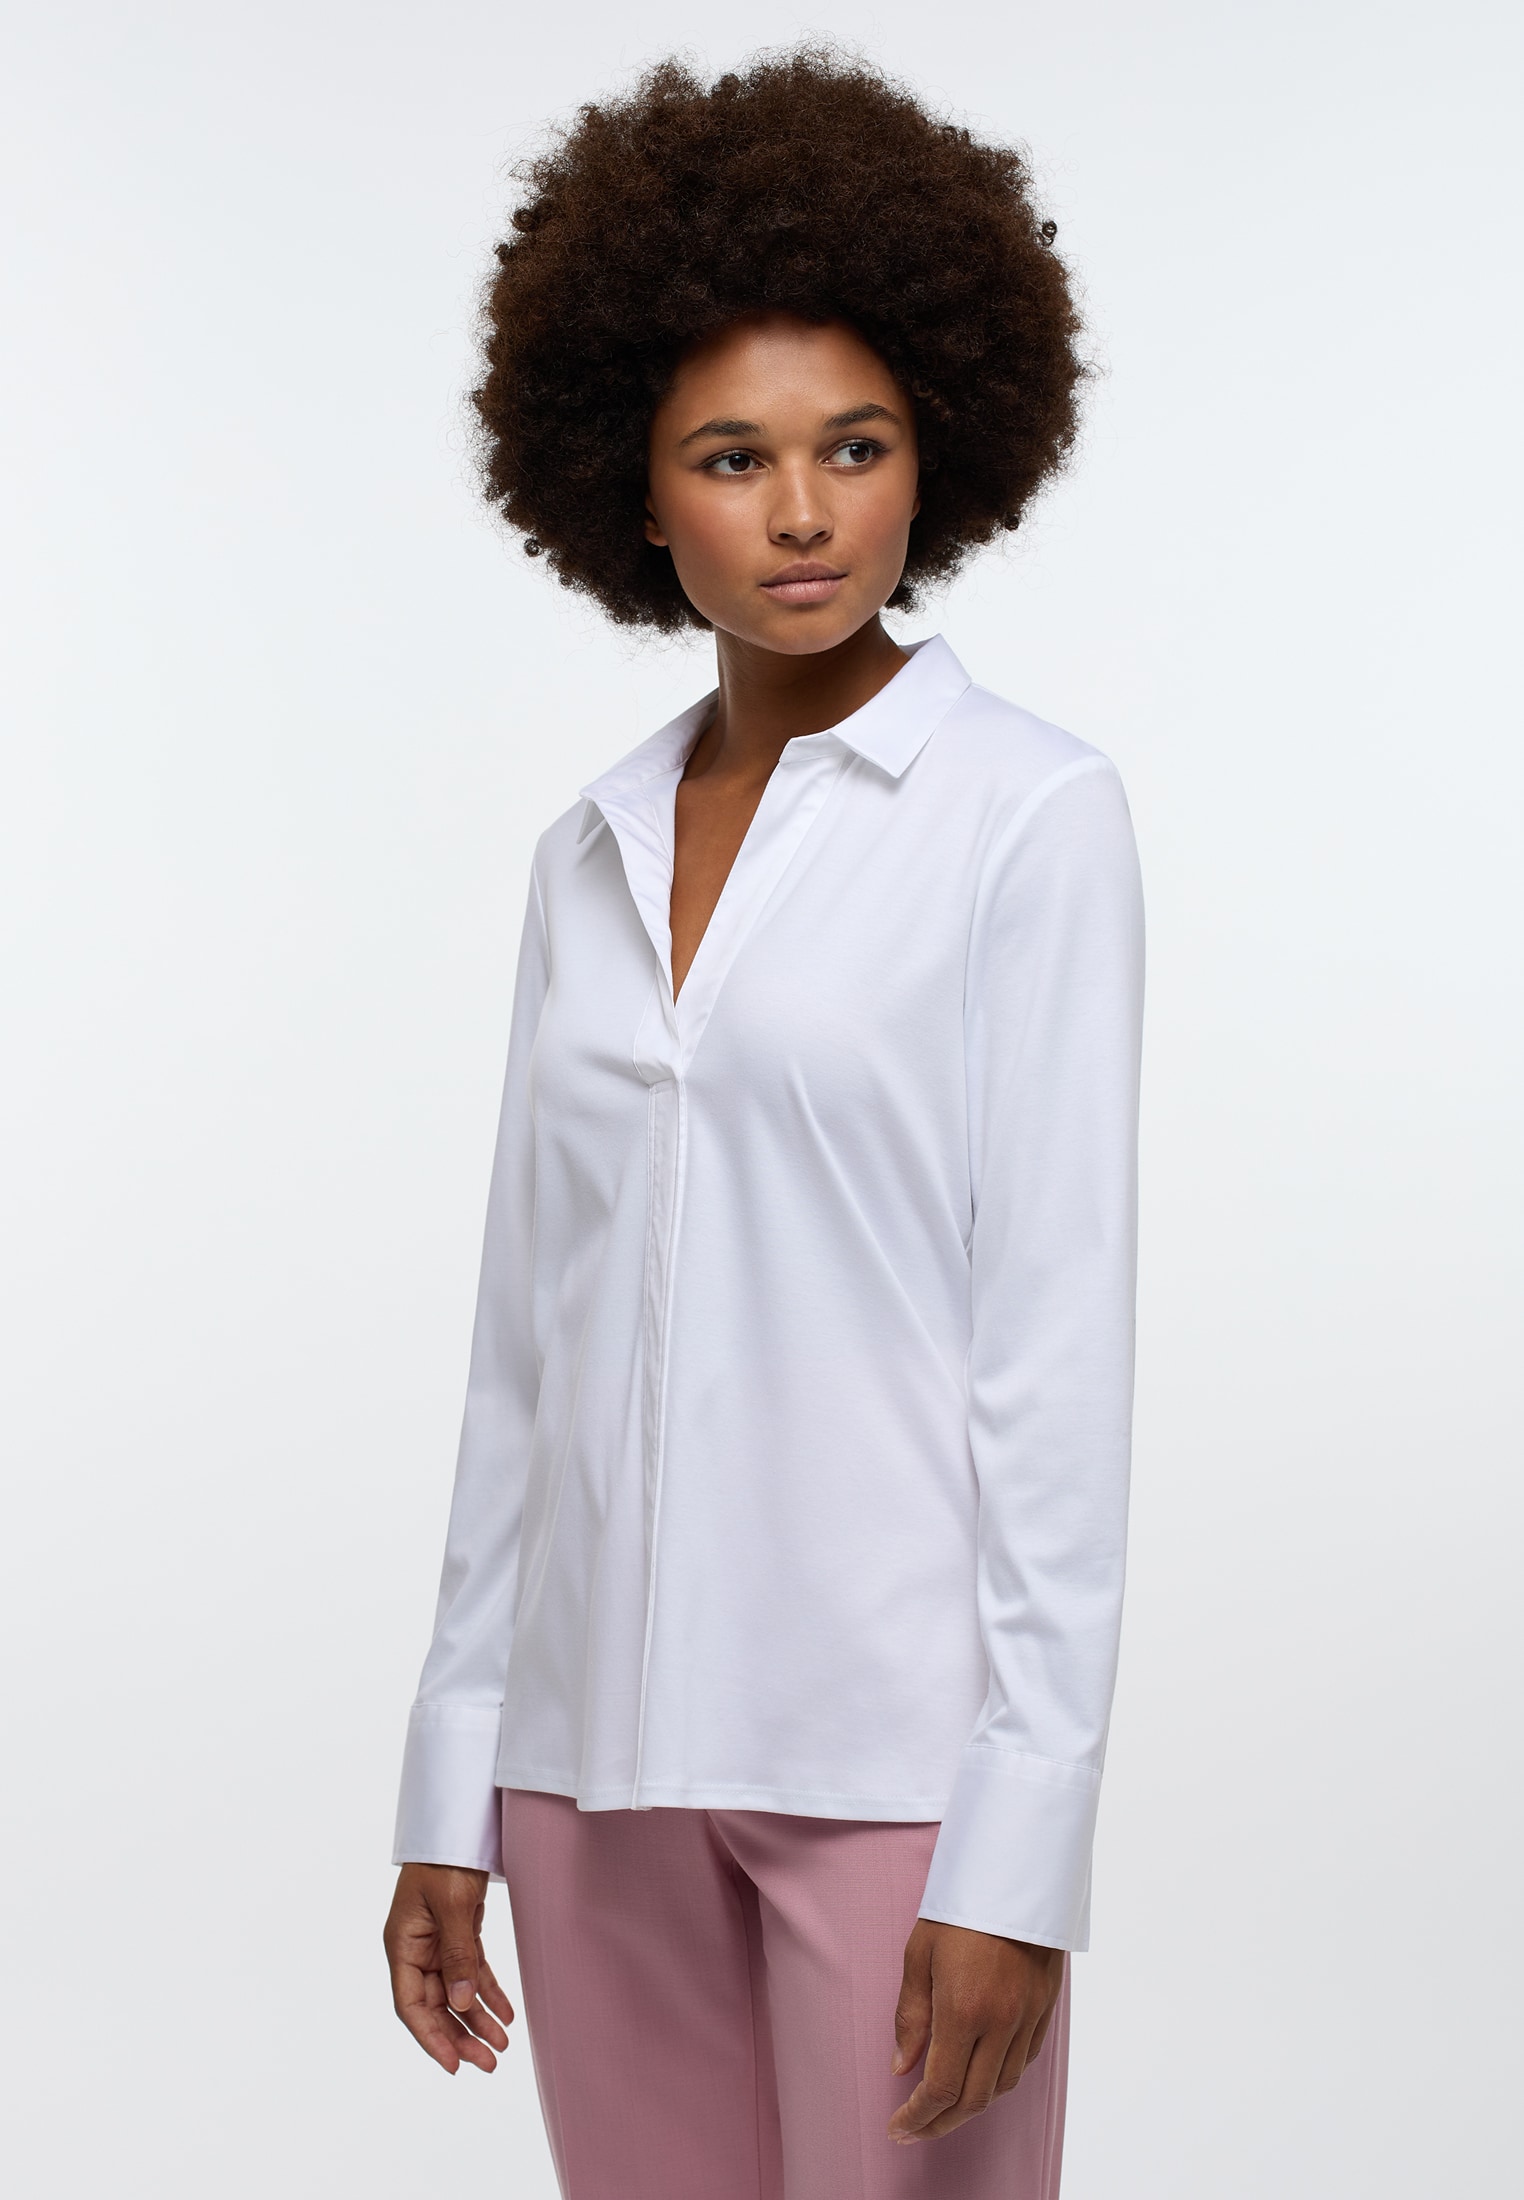 white | Jersey white 2BL04000-00-01-40-1/1 sleeve Shirt | plain long in | 40 Blouse |